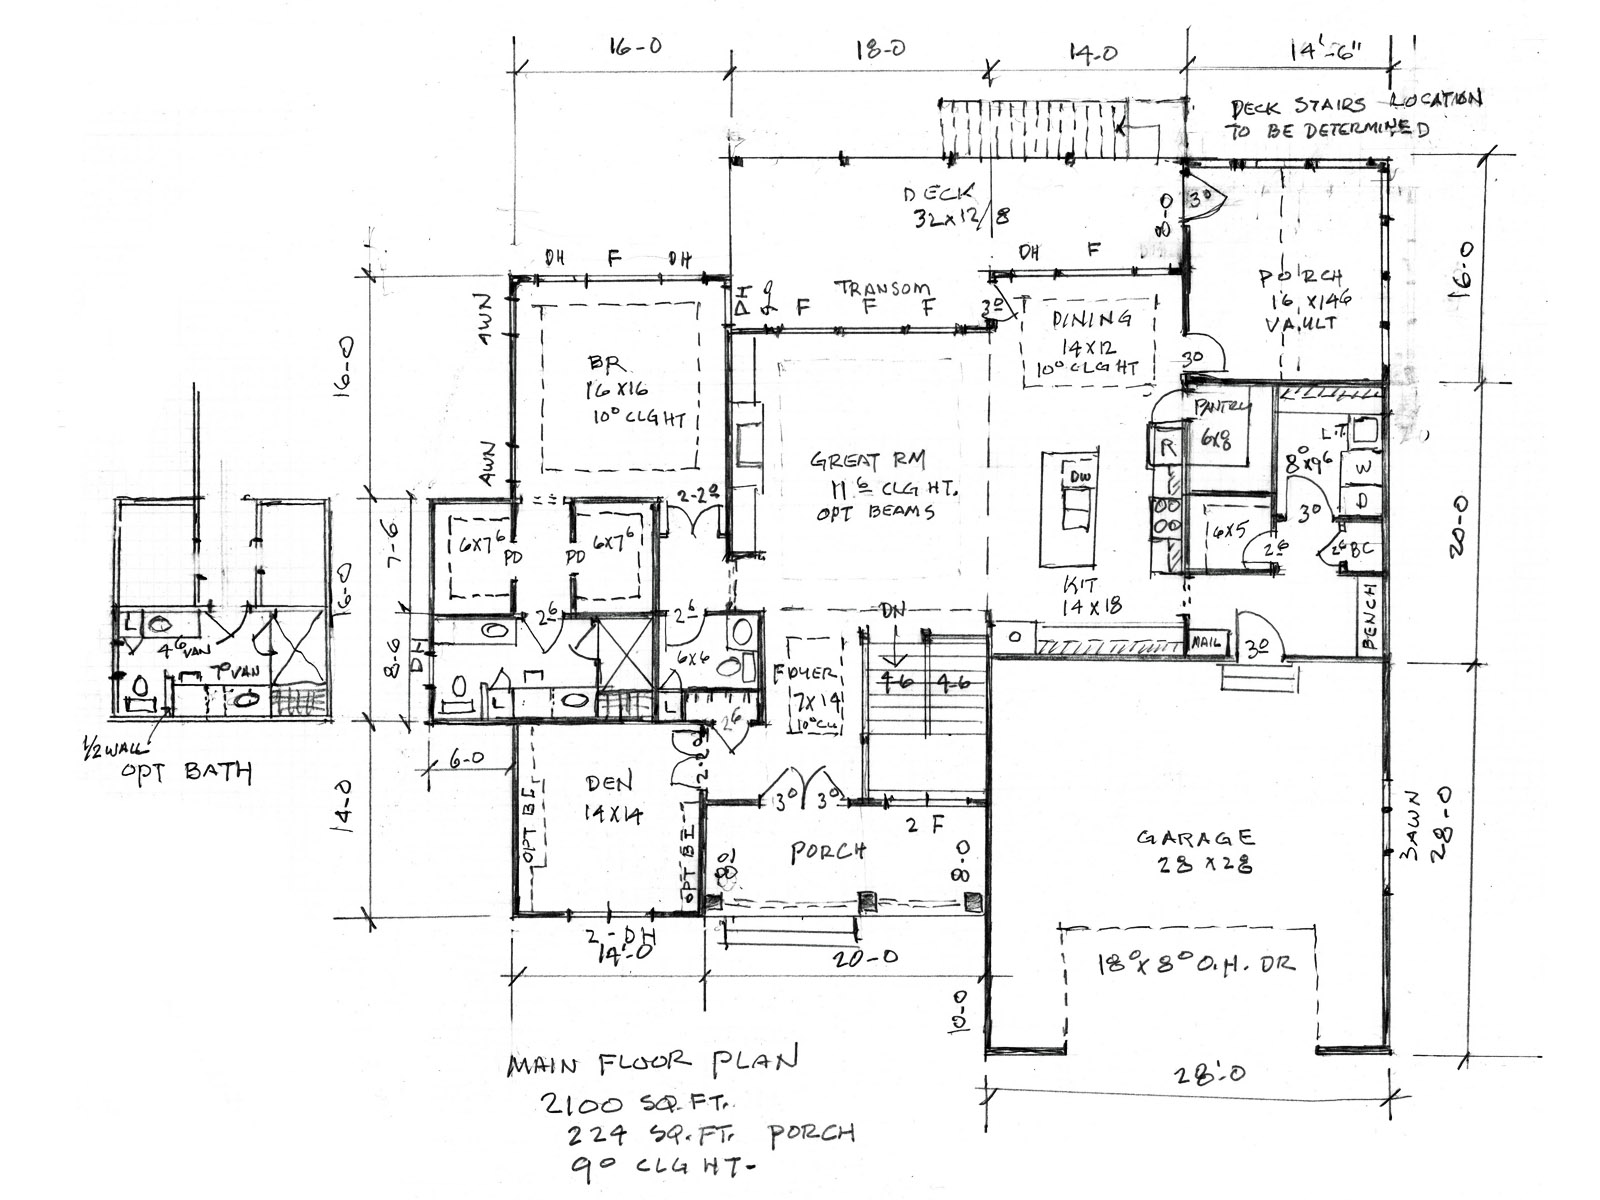 Sandy TJB #731 Home Plan Main Floor Plan